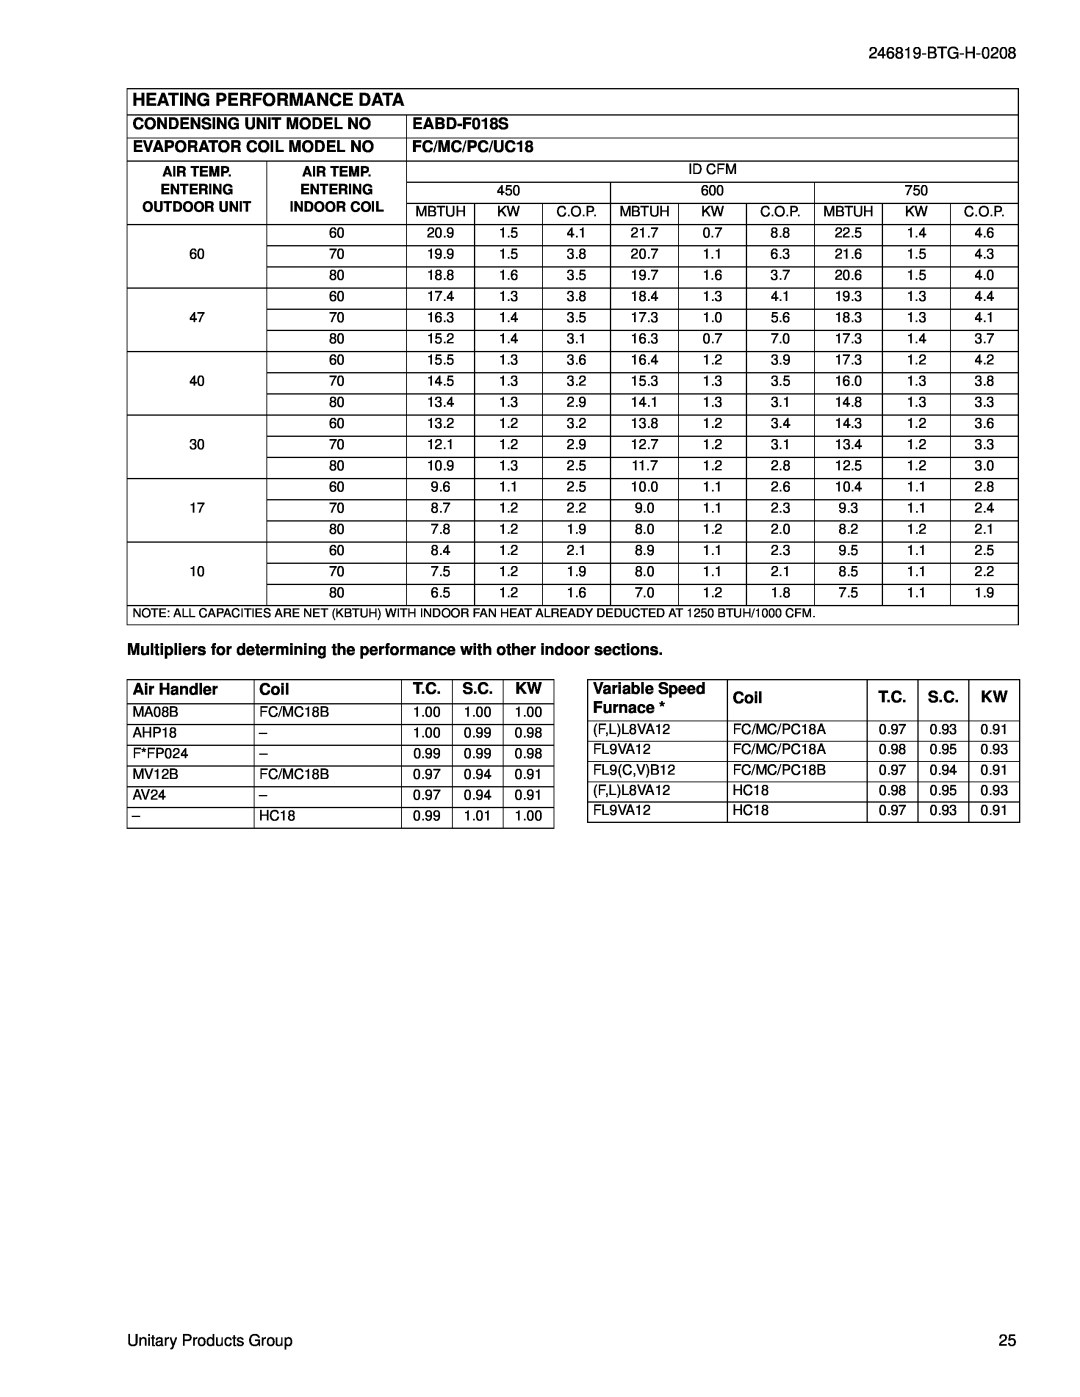 York E*BD-F018 THRU 060, W)036 THRU 060, E*BD-(T warranty Heating Performance Data 